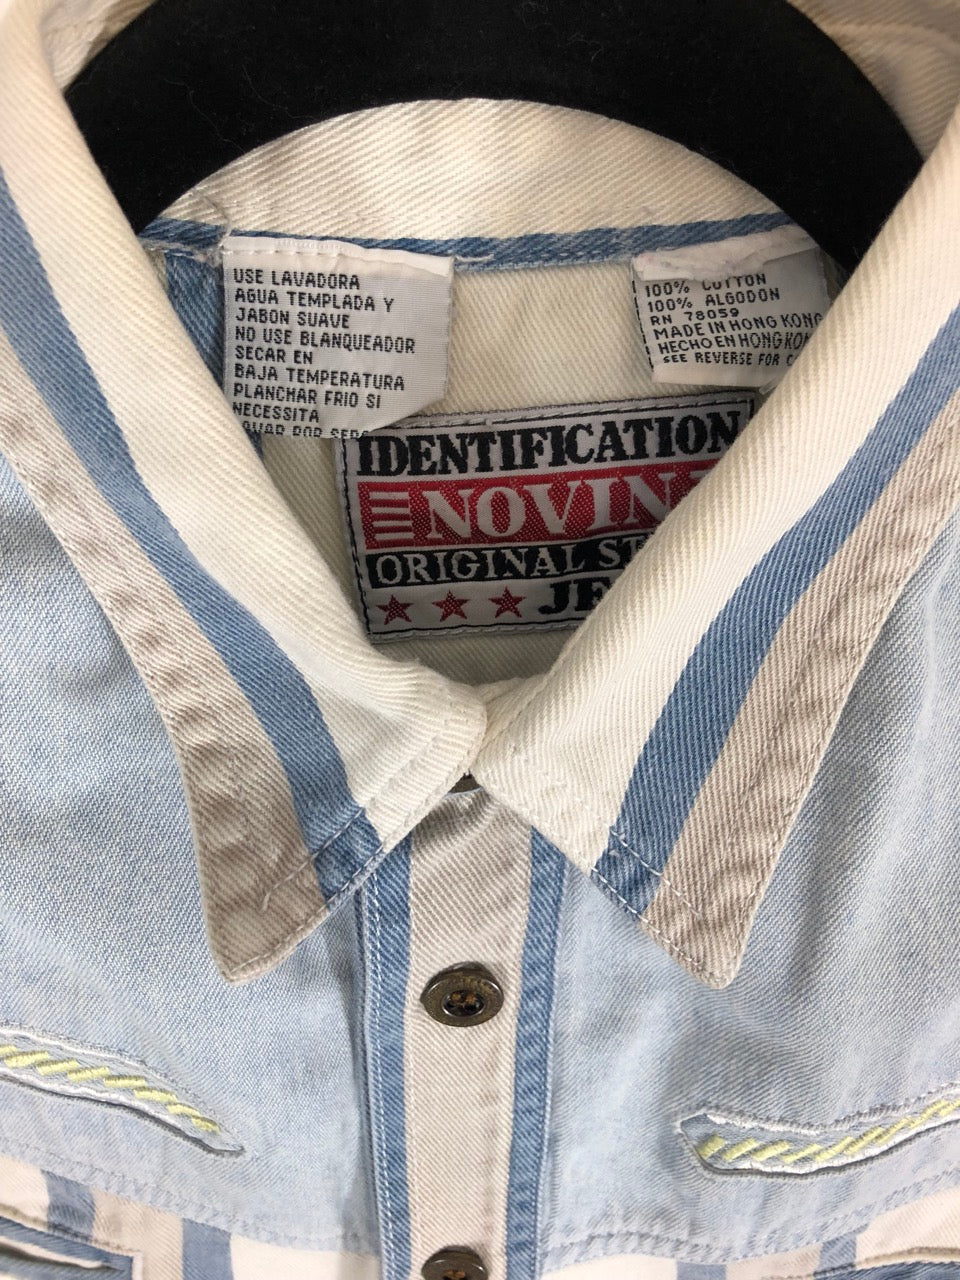 Identification Novin Original Style Jeans Shirt